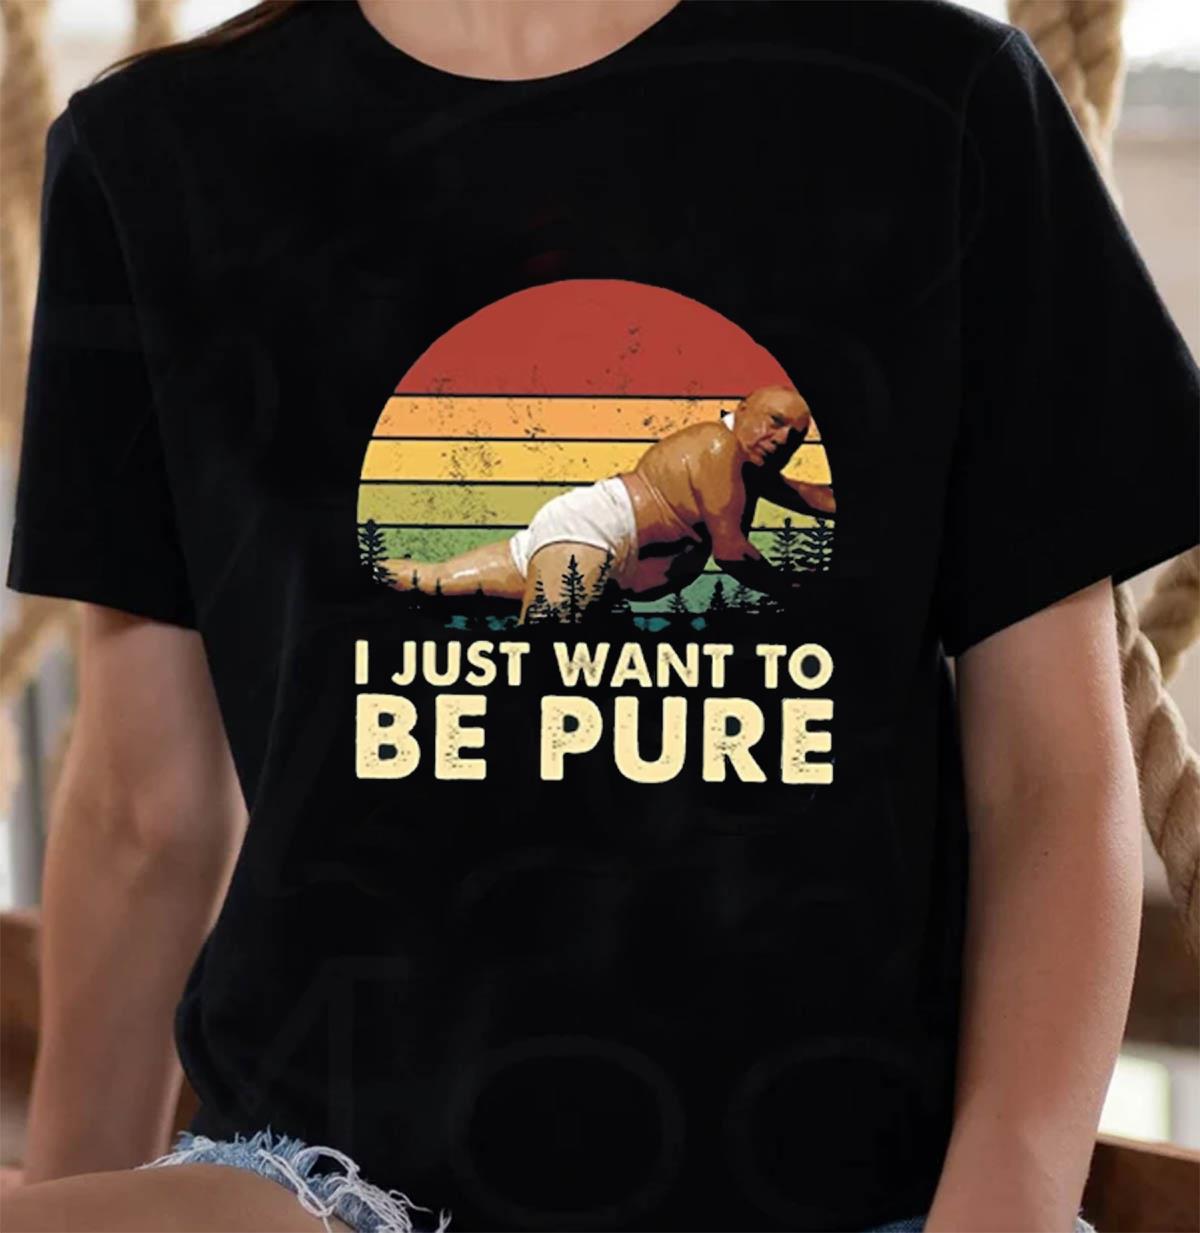 FullOnNostalgia Pitbulls and Parolees Women's T-Shirt